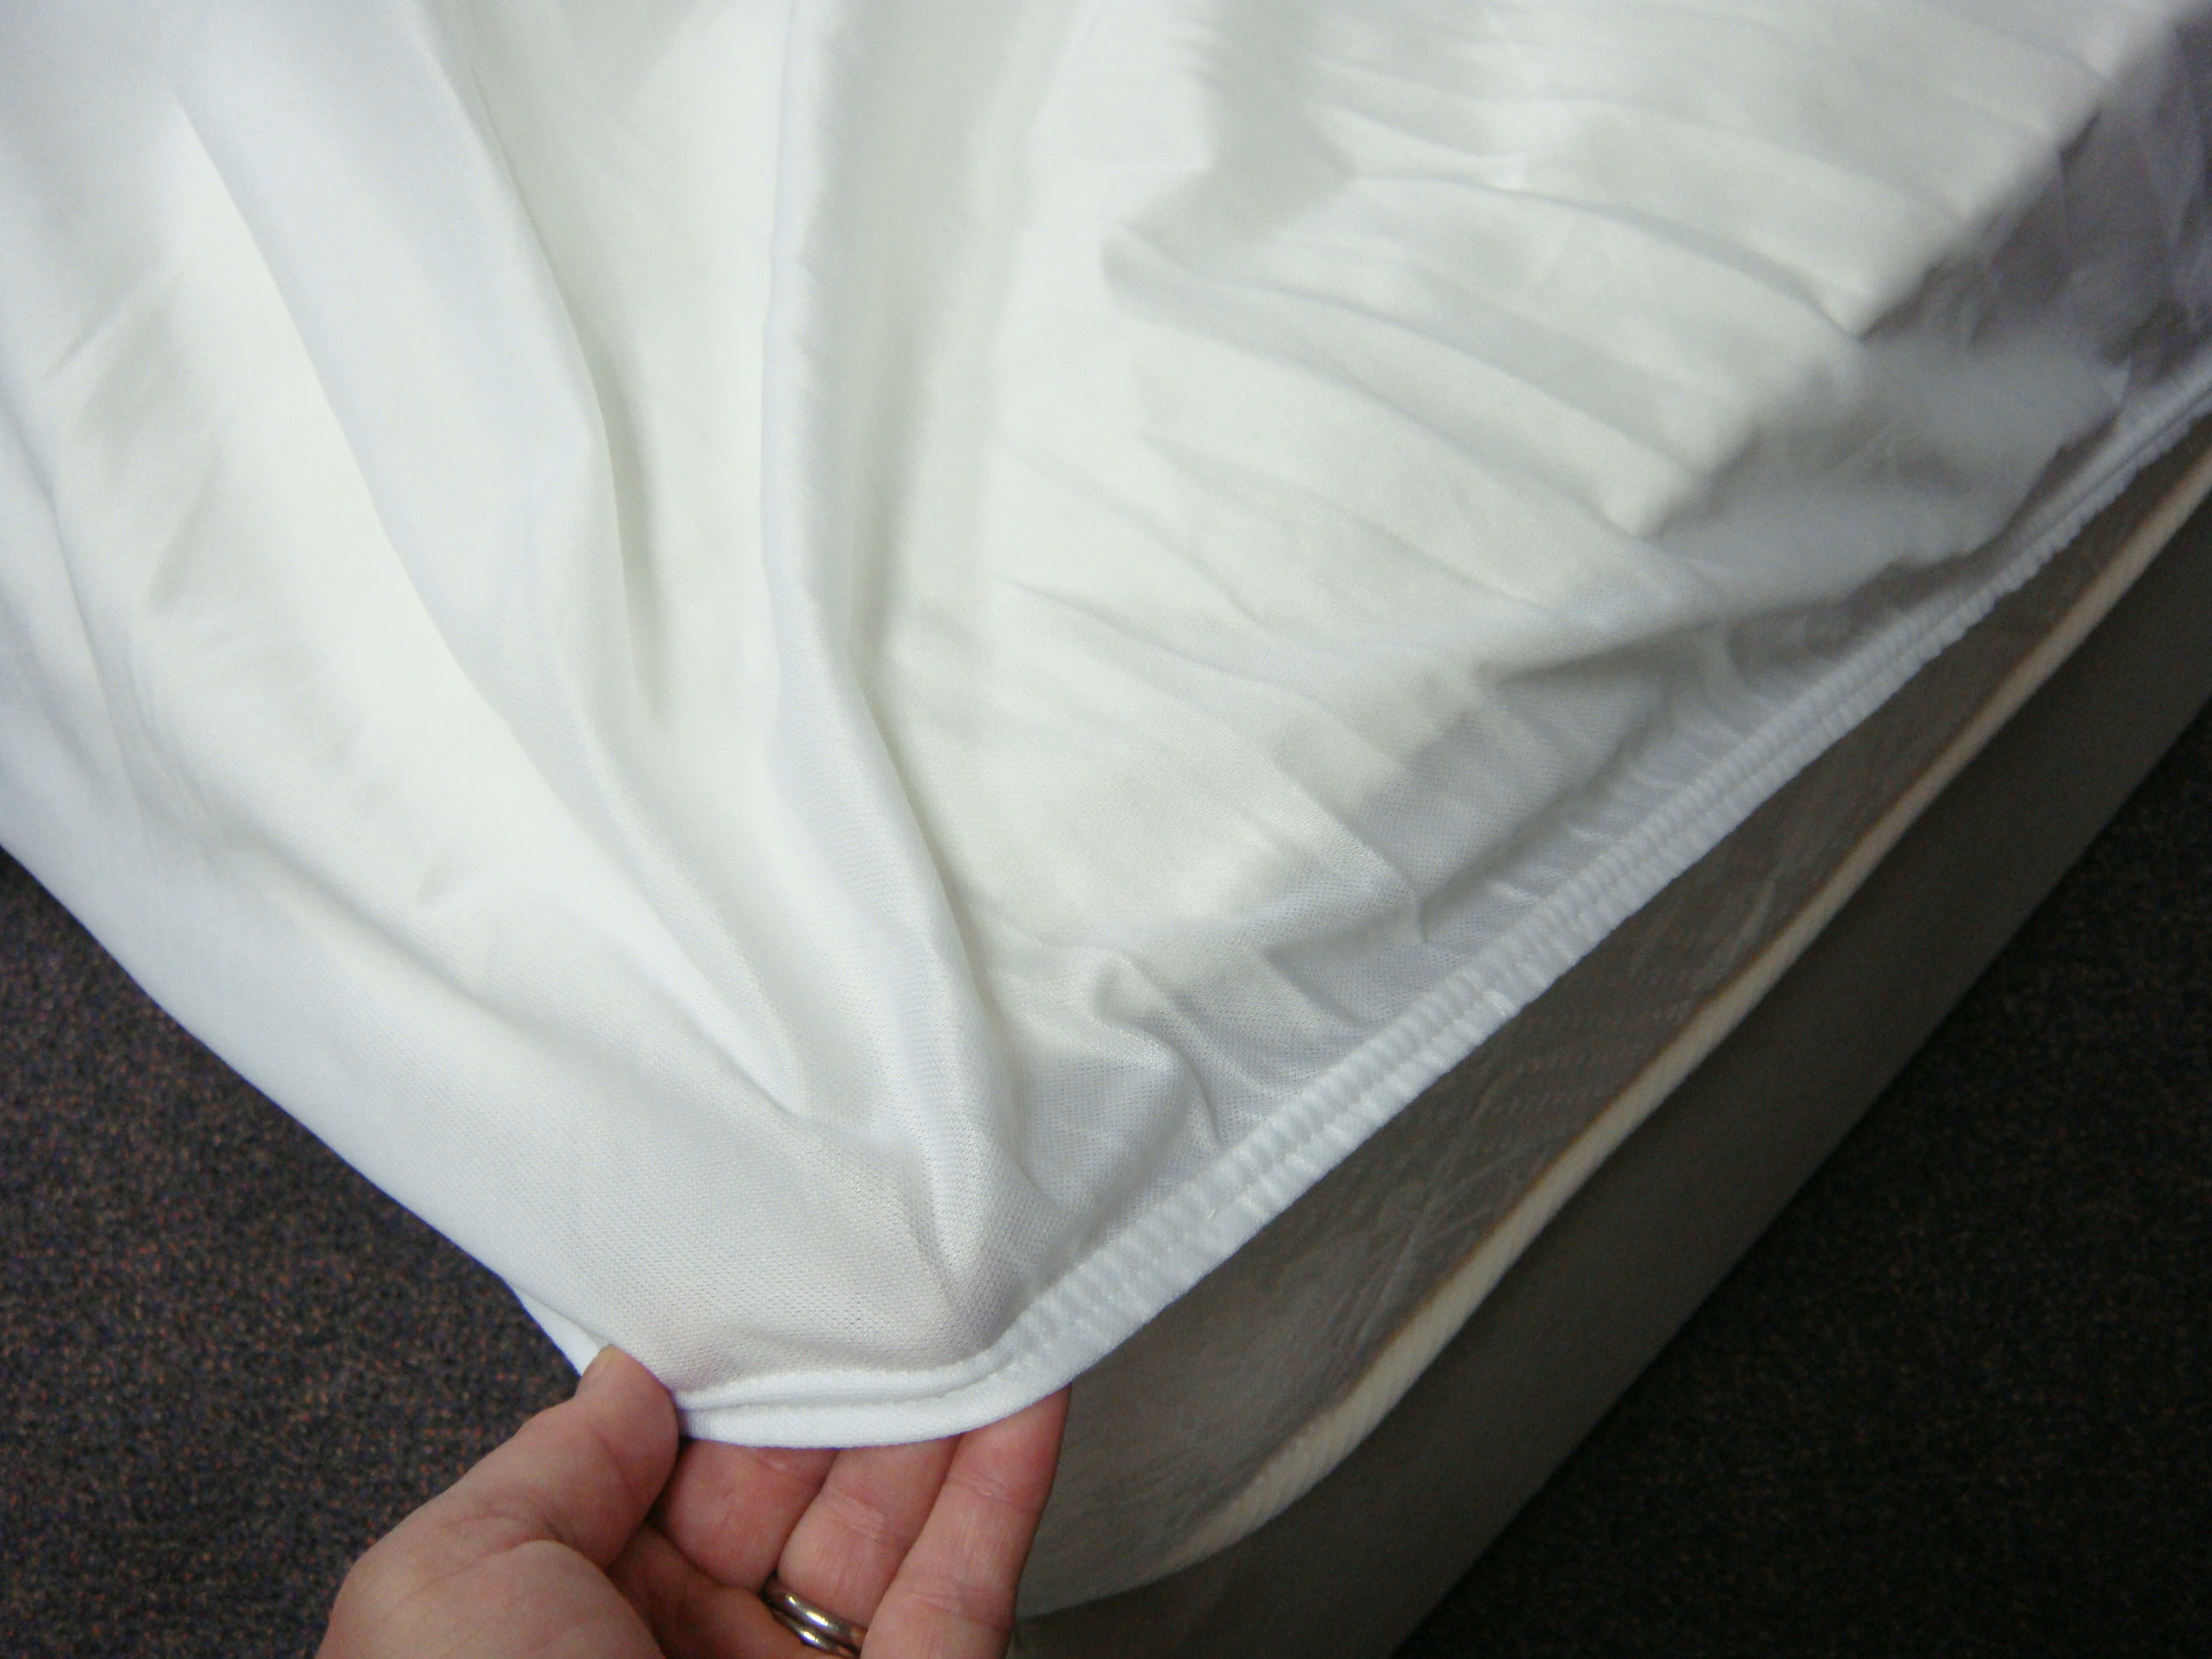 waterproof cot mattress protector nz